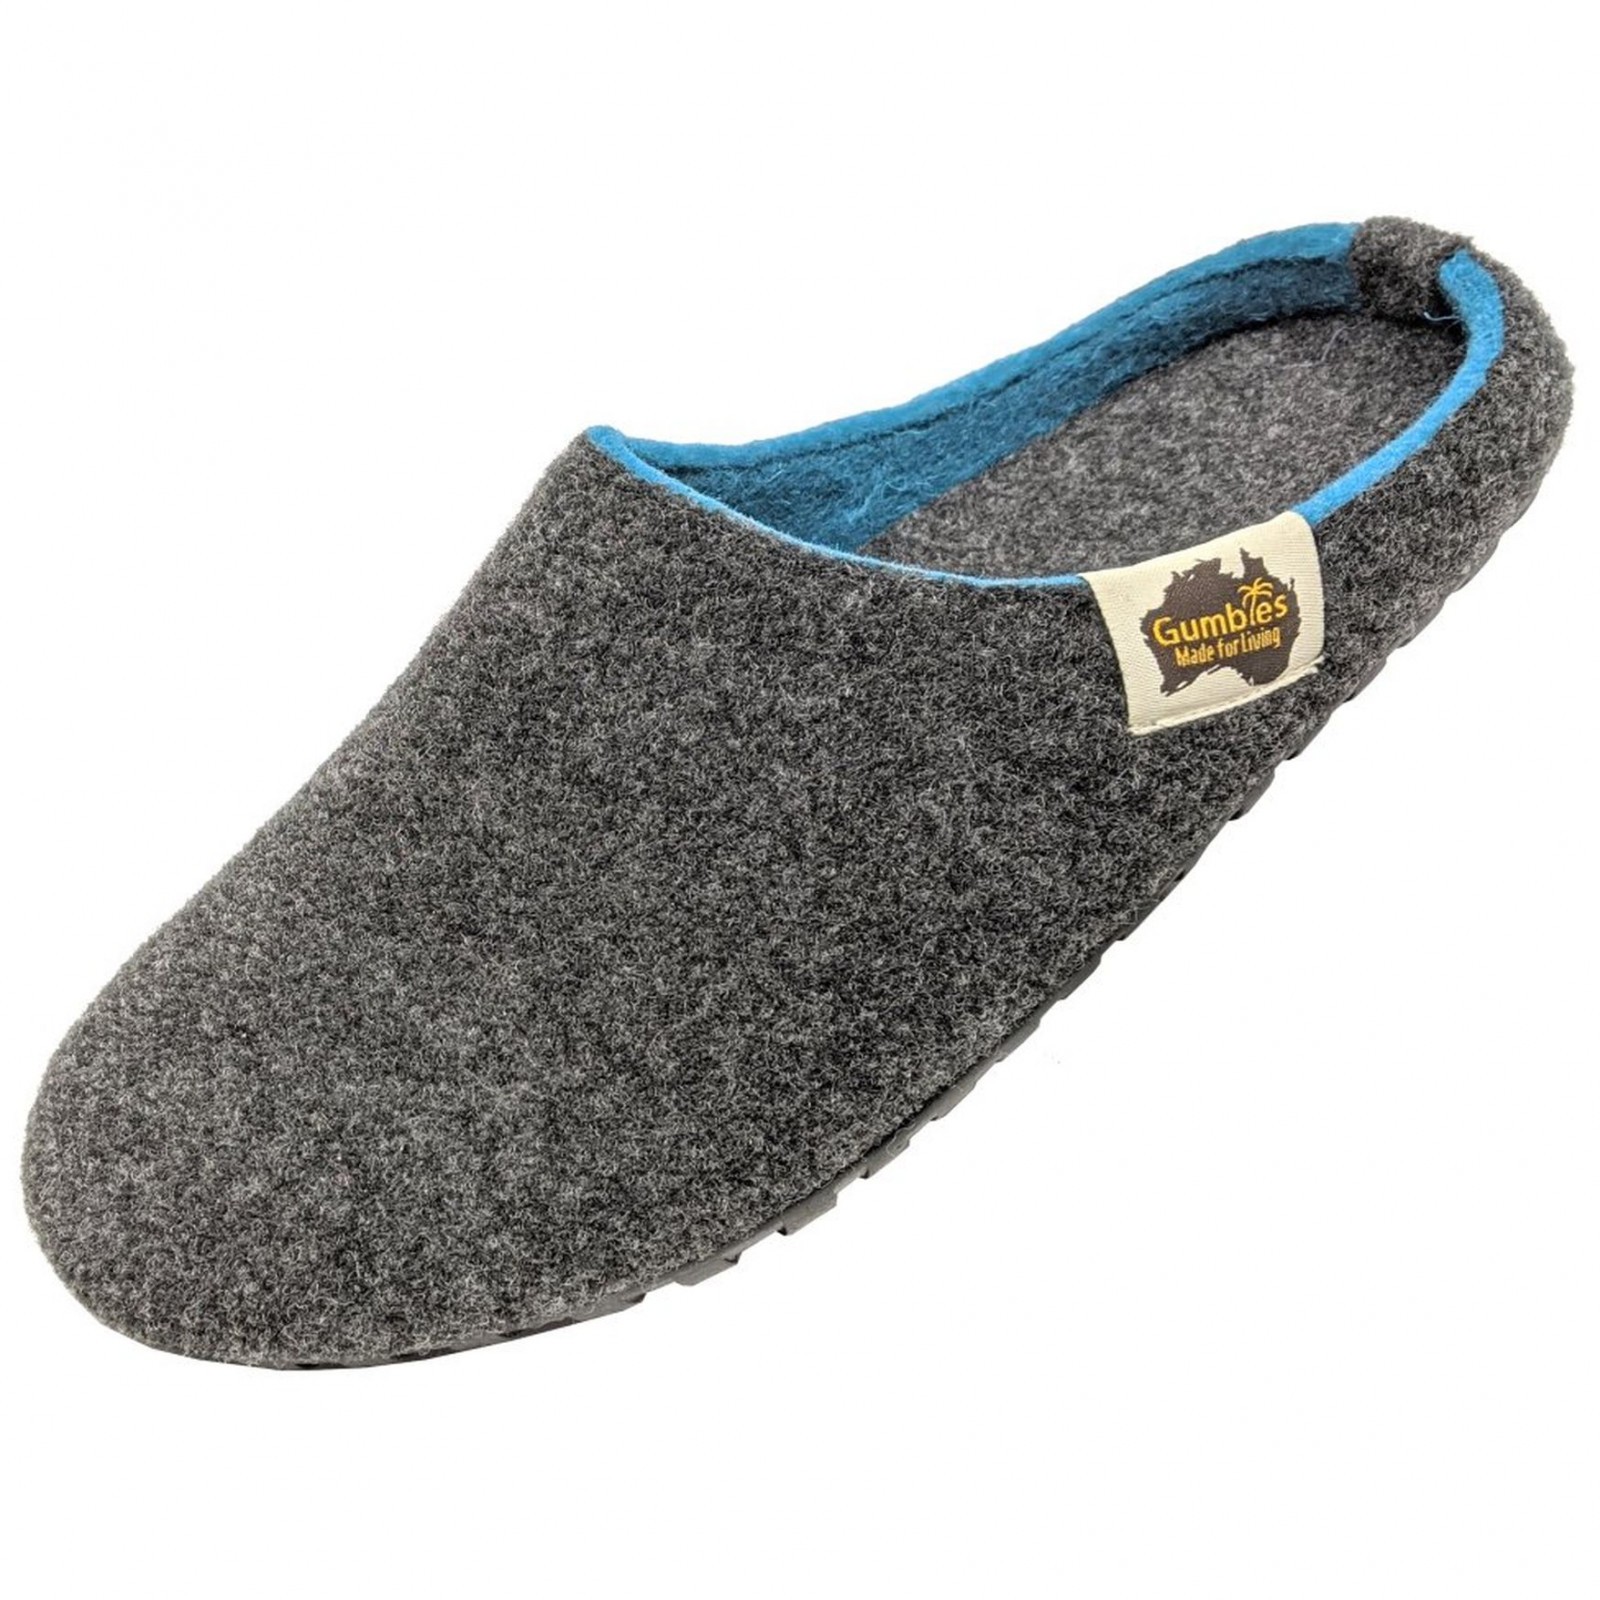 Pantofle Gumbies Outback - Charcoral & Turquoise Velikost bot (EU): 41 / Barva: tmavě šedá